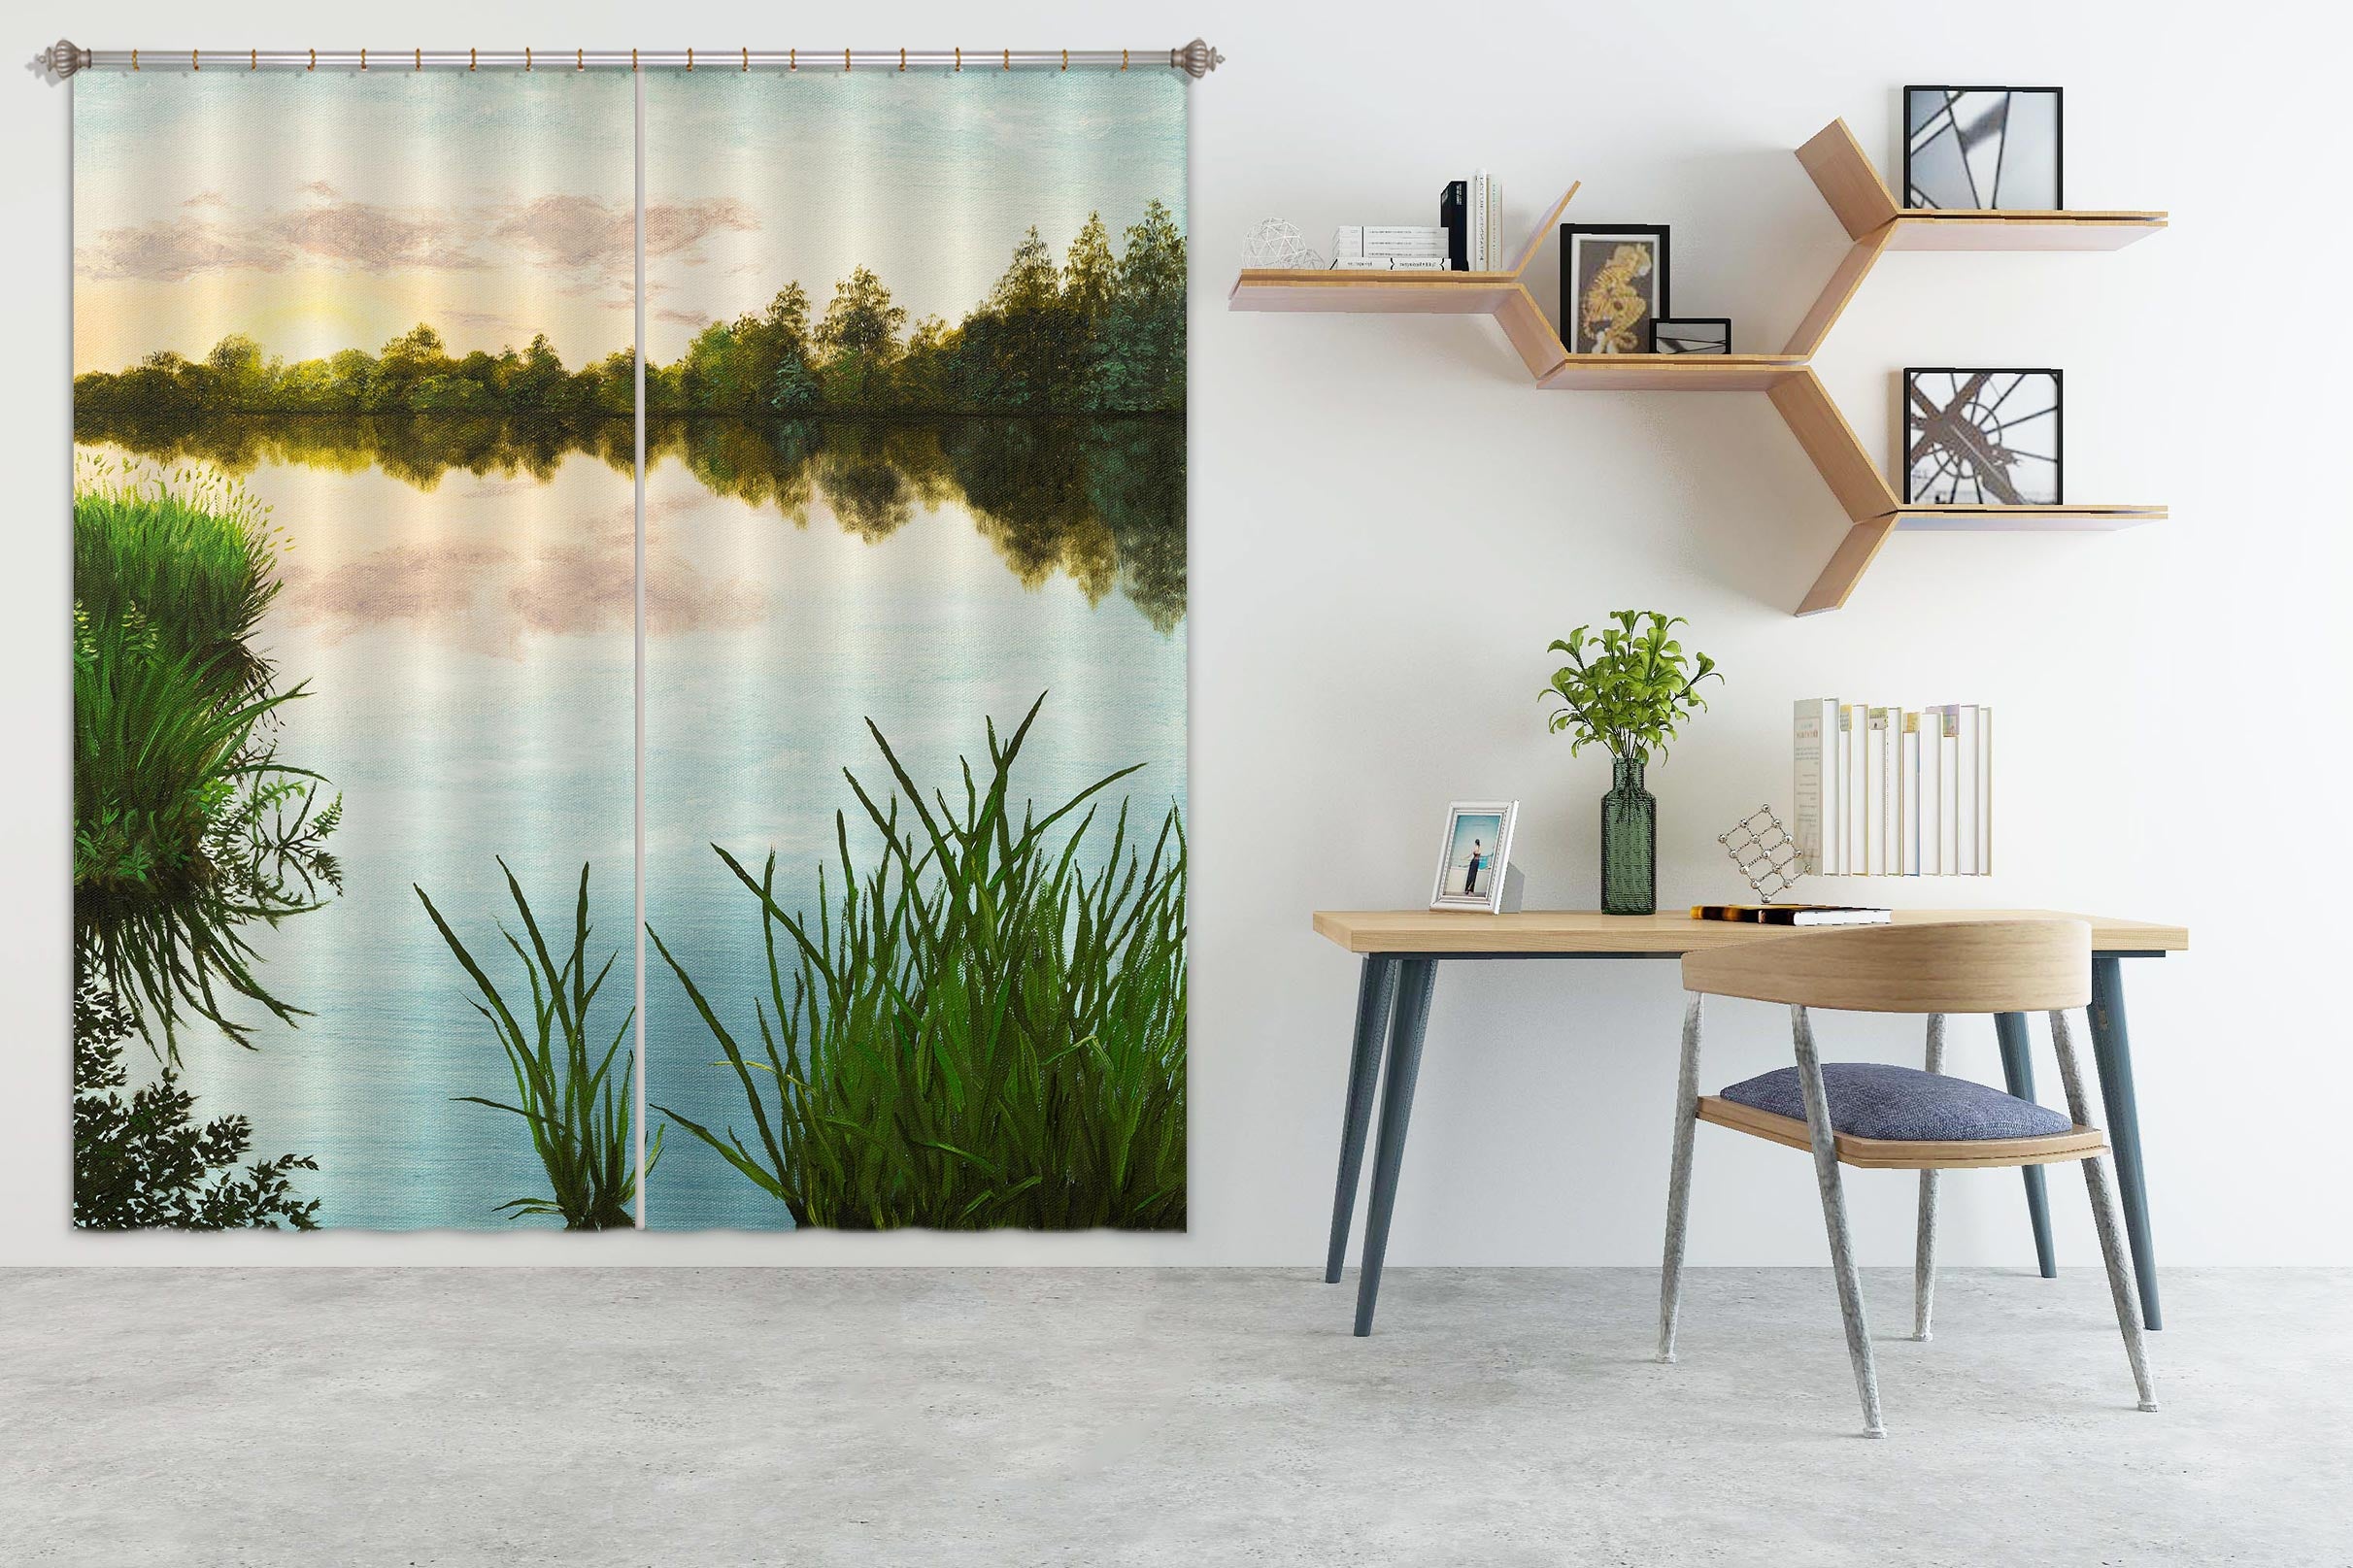 3D Grass Lakeside 1724 Marina Zotova Curtain Curtains Drapes